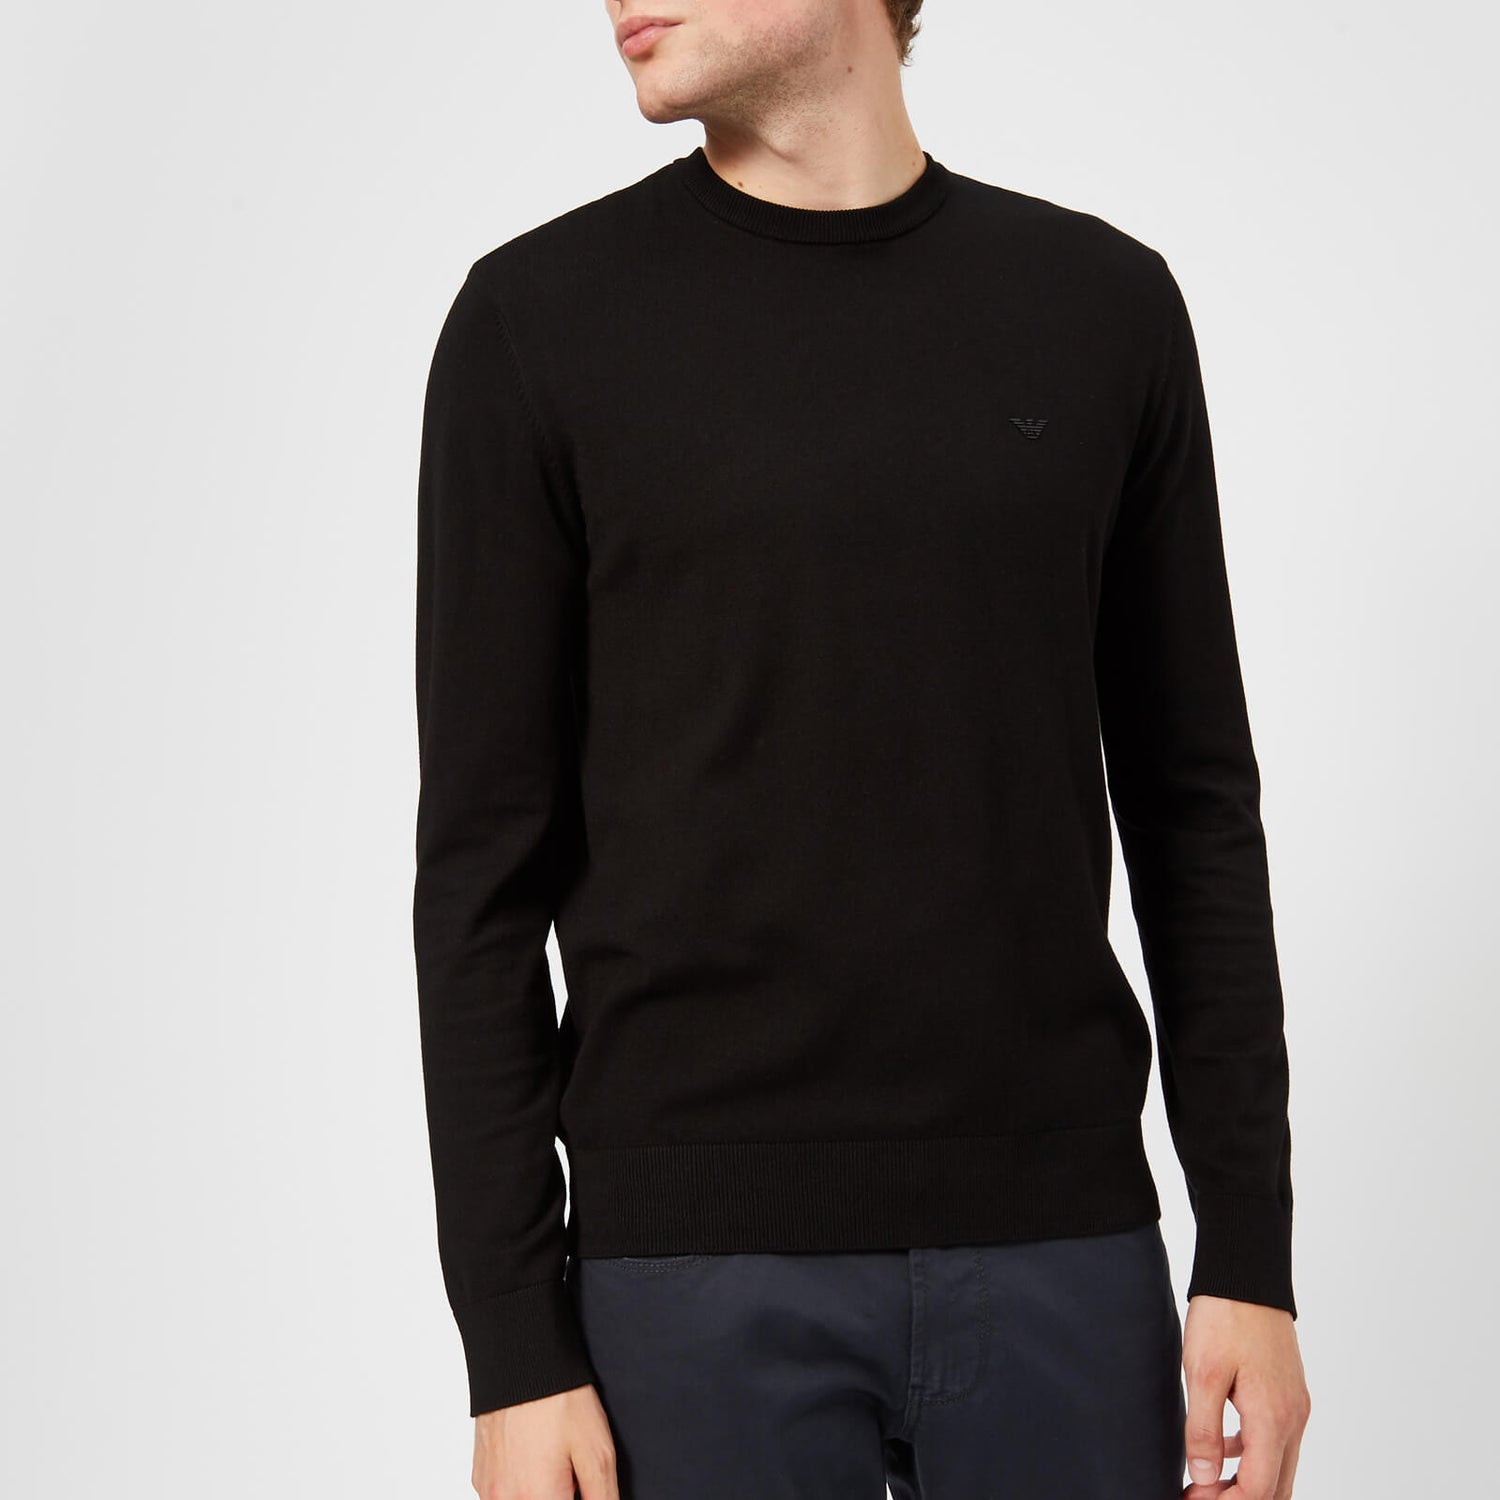 Emporio Armani Men's Basic Crew Neck Sweater - Black - Free UK Delivery